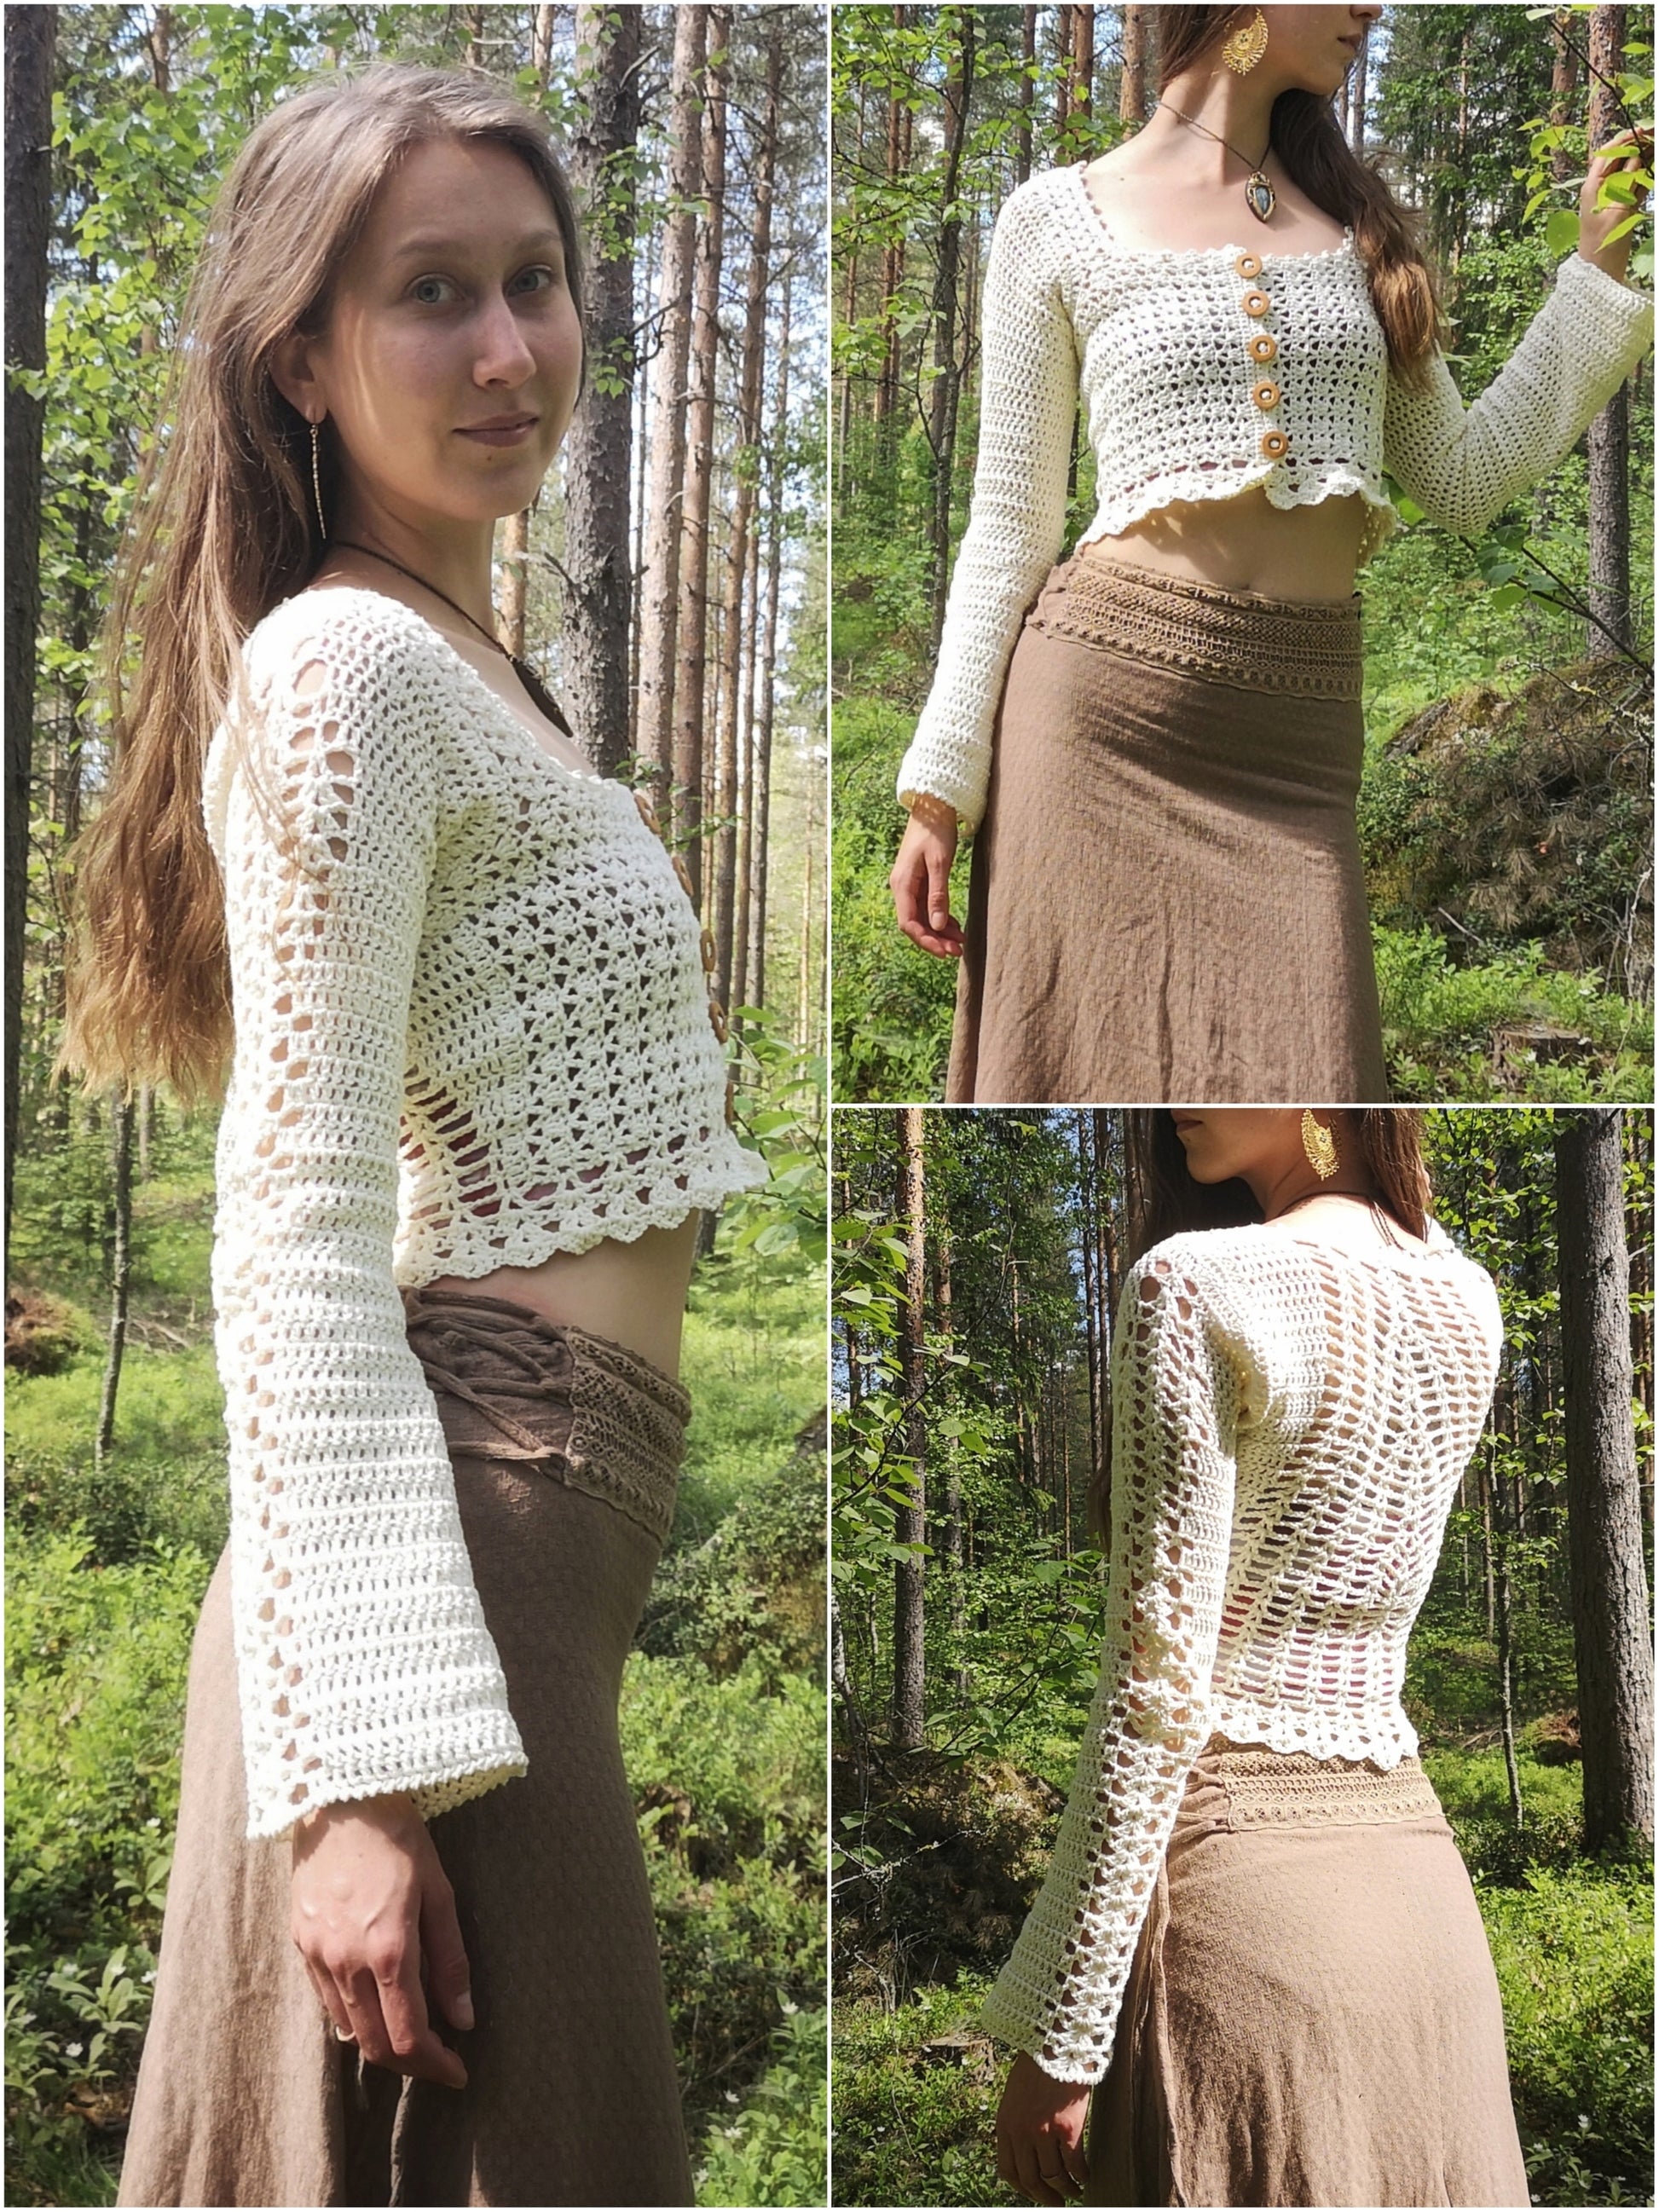 OLIVIA, PDF crochet pattern